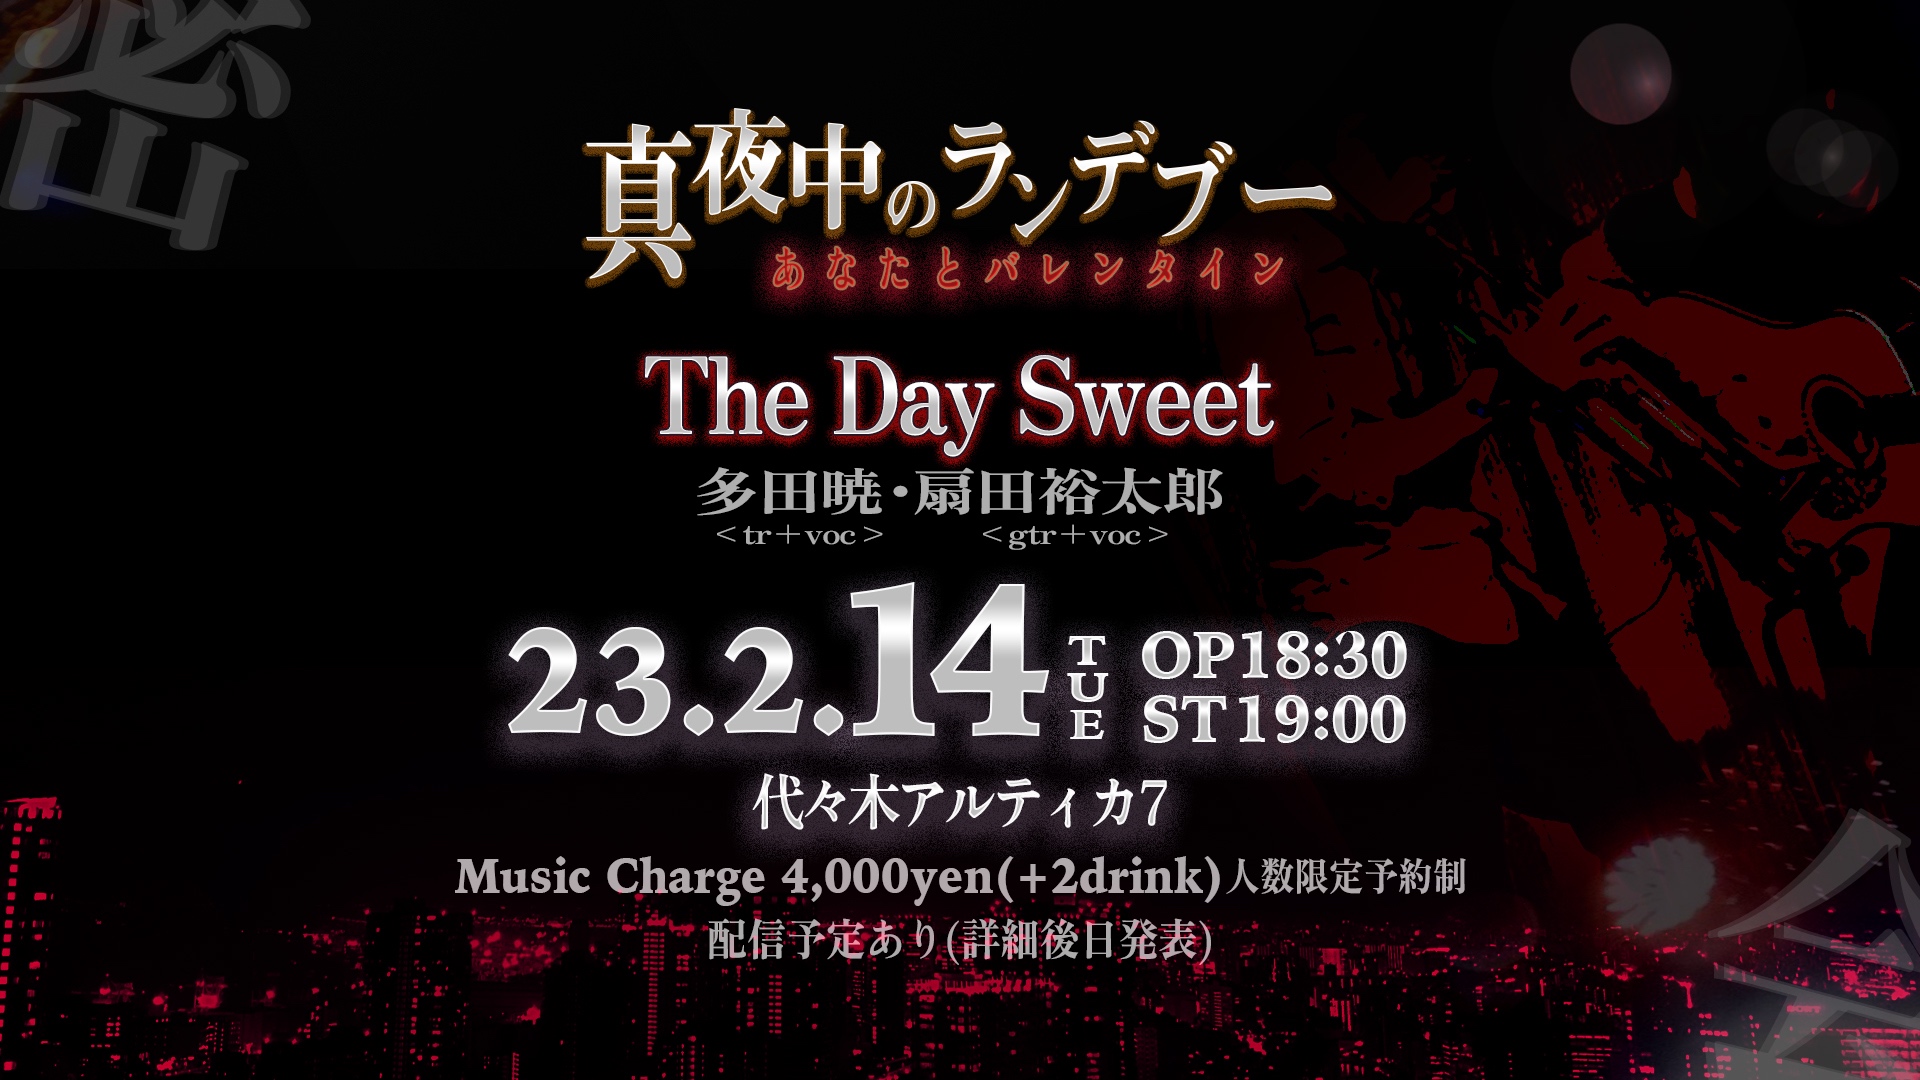 2/14(tue) The Day Sweet【代々木 アルティカセブン からLIVE配信】